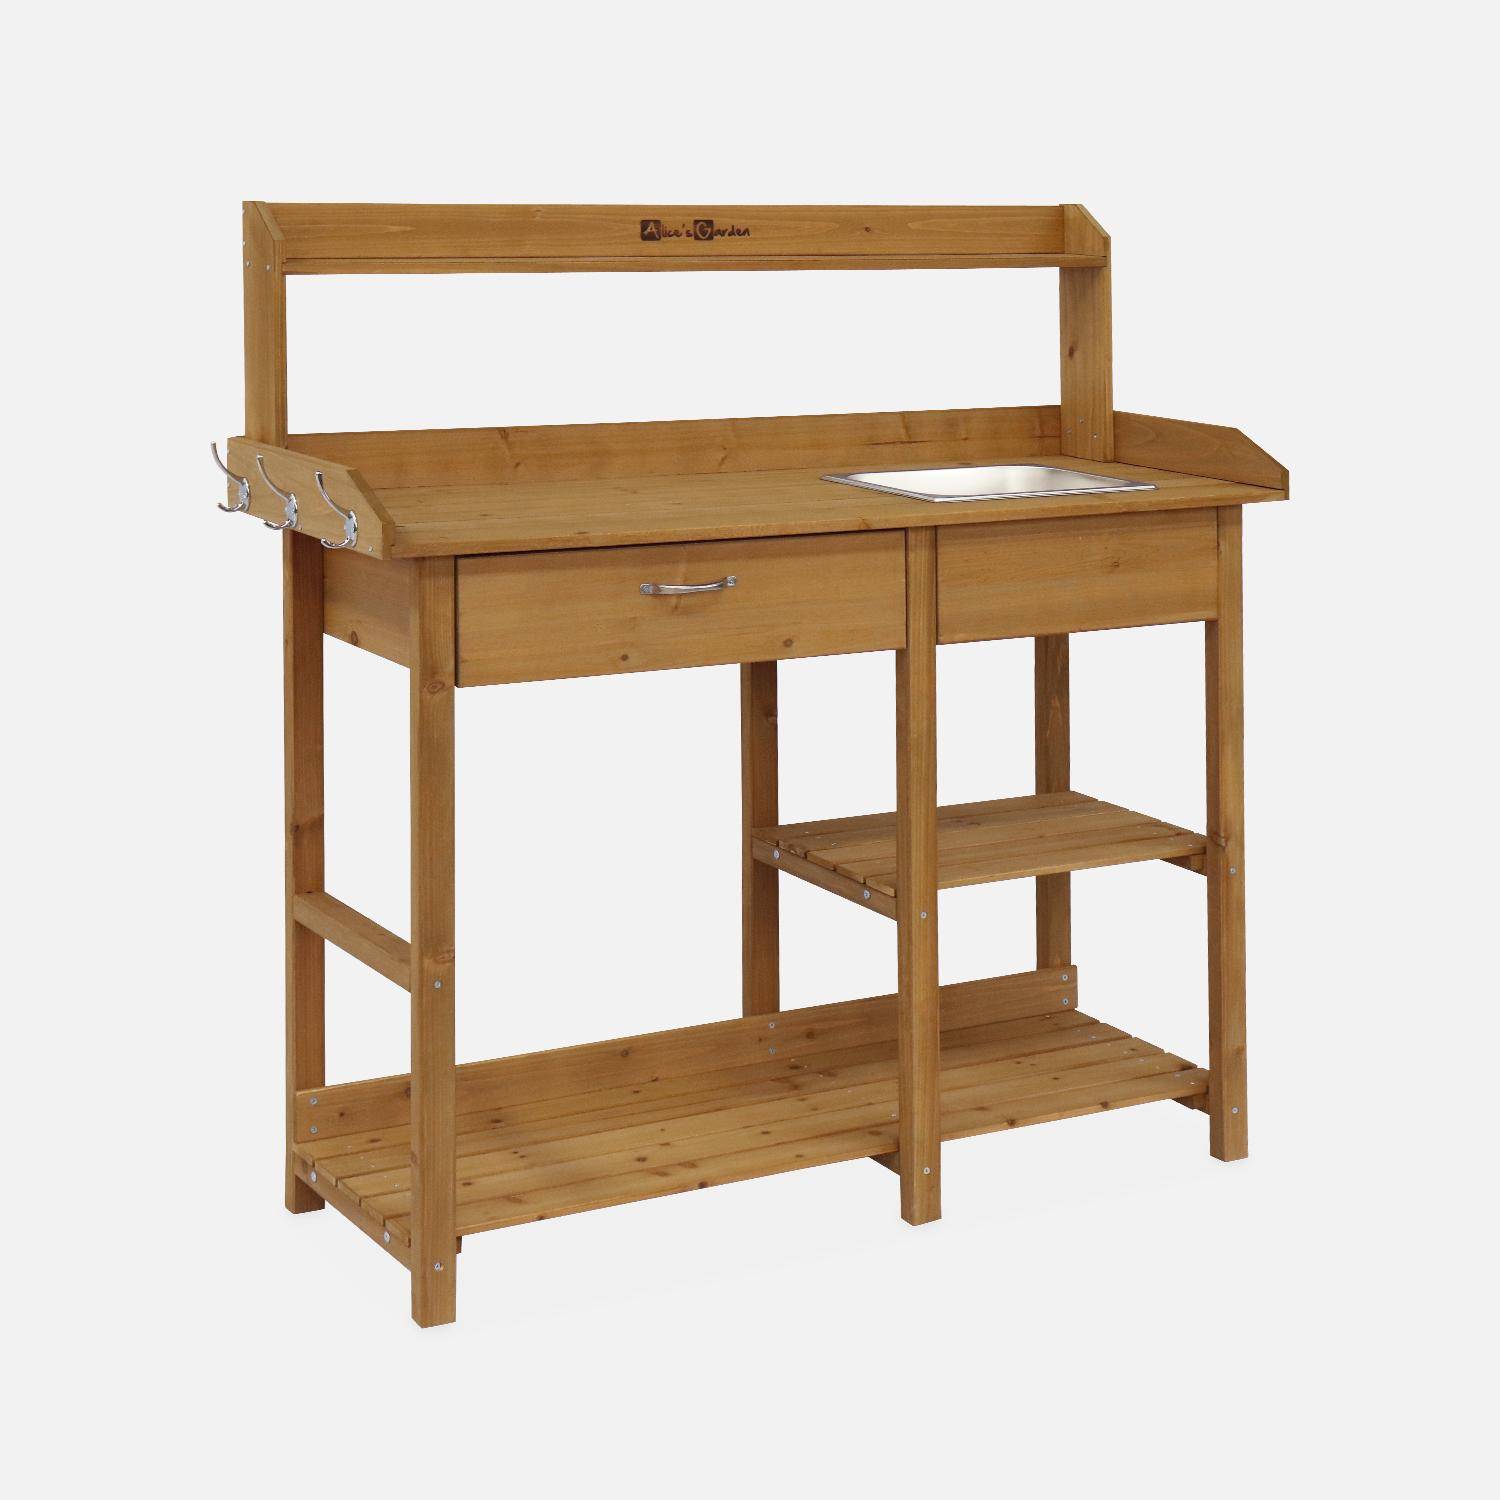 Capucine mesa de madera para macetas, 1 cajón, 2 estantes, 1 fregadero, ganchos,sweeek,Photo3